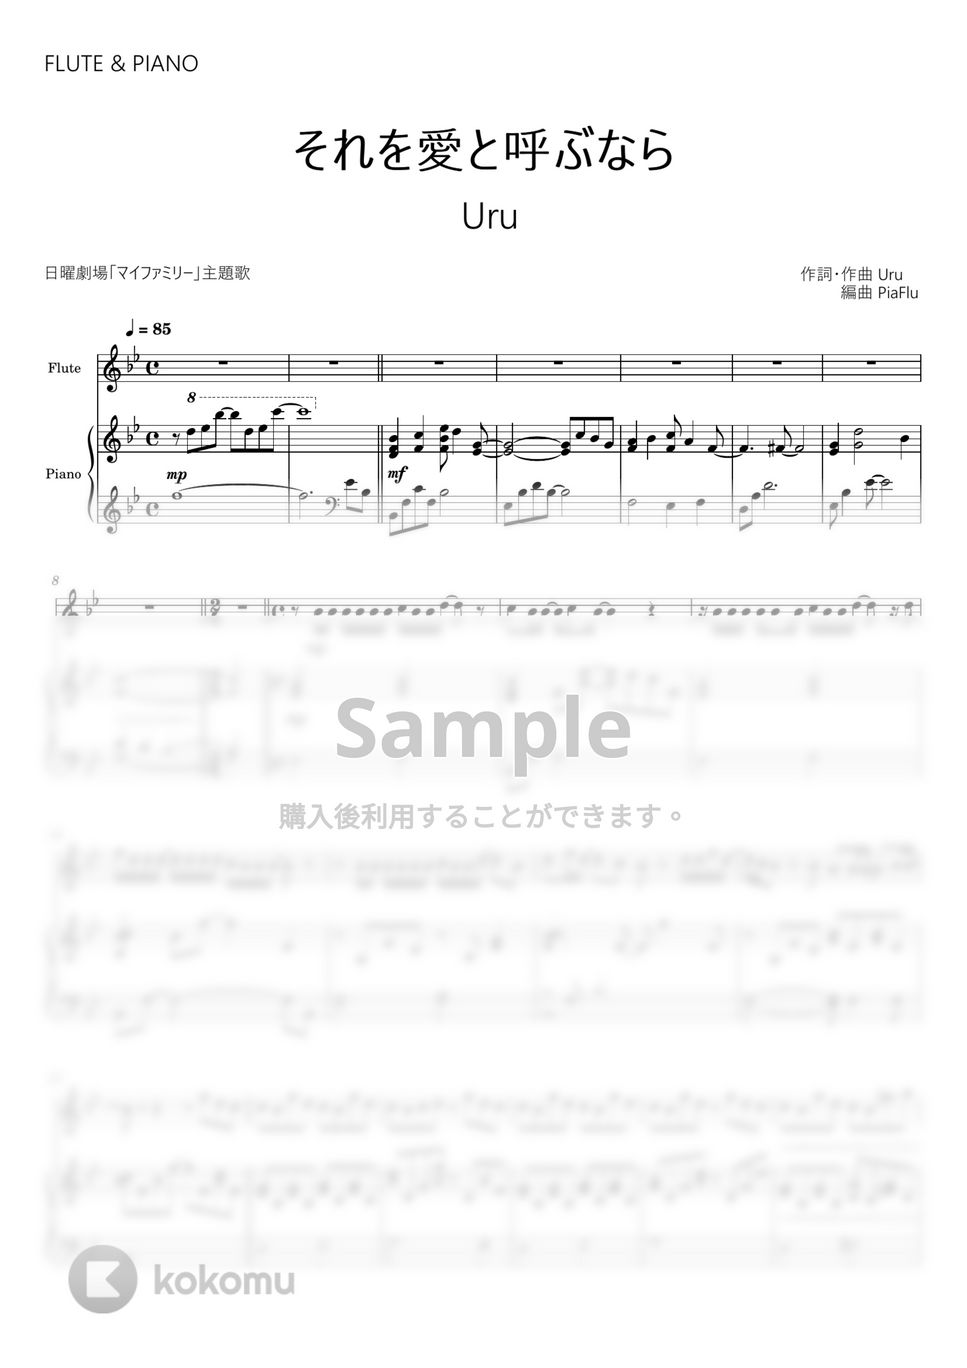 Uru - それを愛と呼ぶなら (フルート&ピアノ伴奏) by PiaFlu